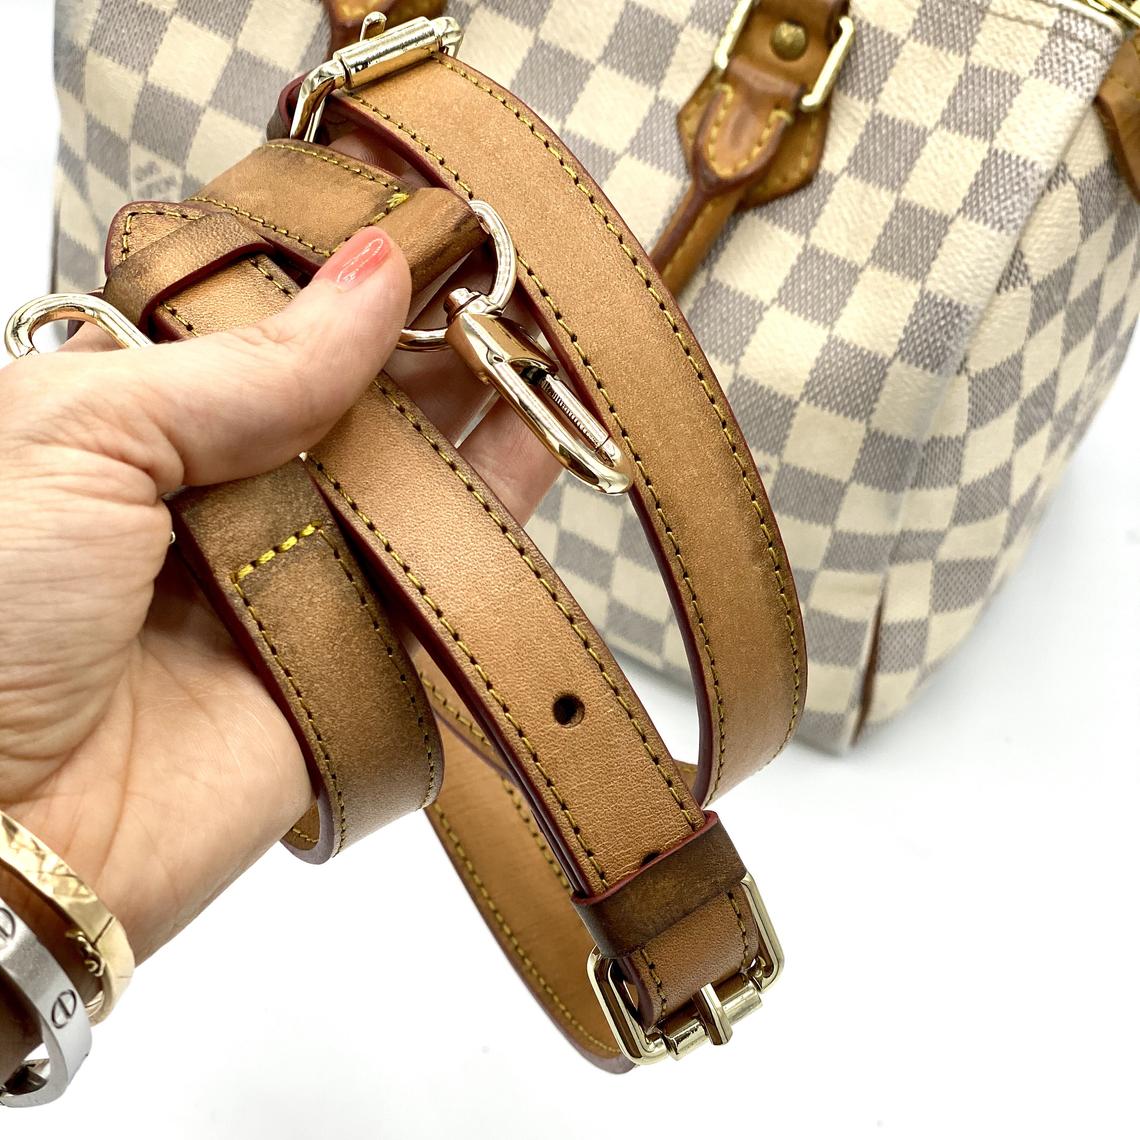 3/8 in. Vachetta Leather Adjustable Cross Body Purse Bag Strap